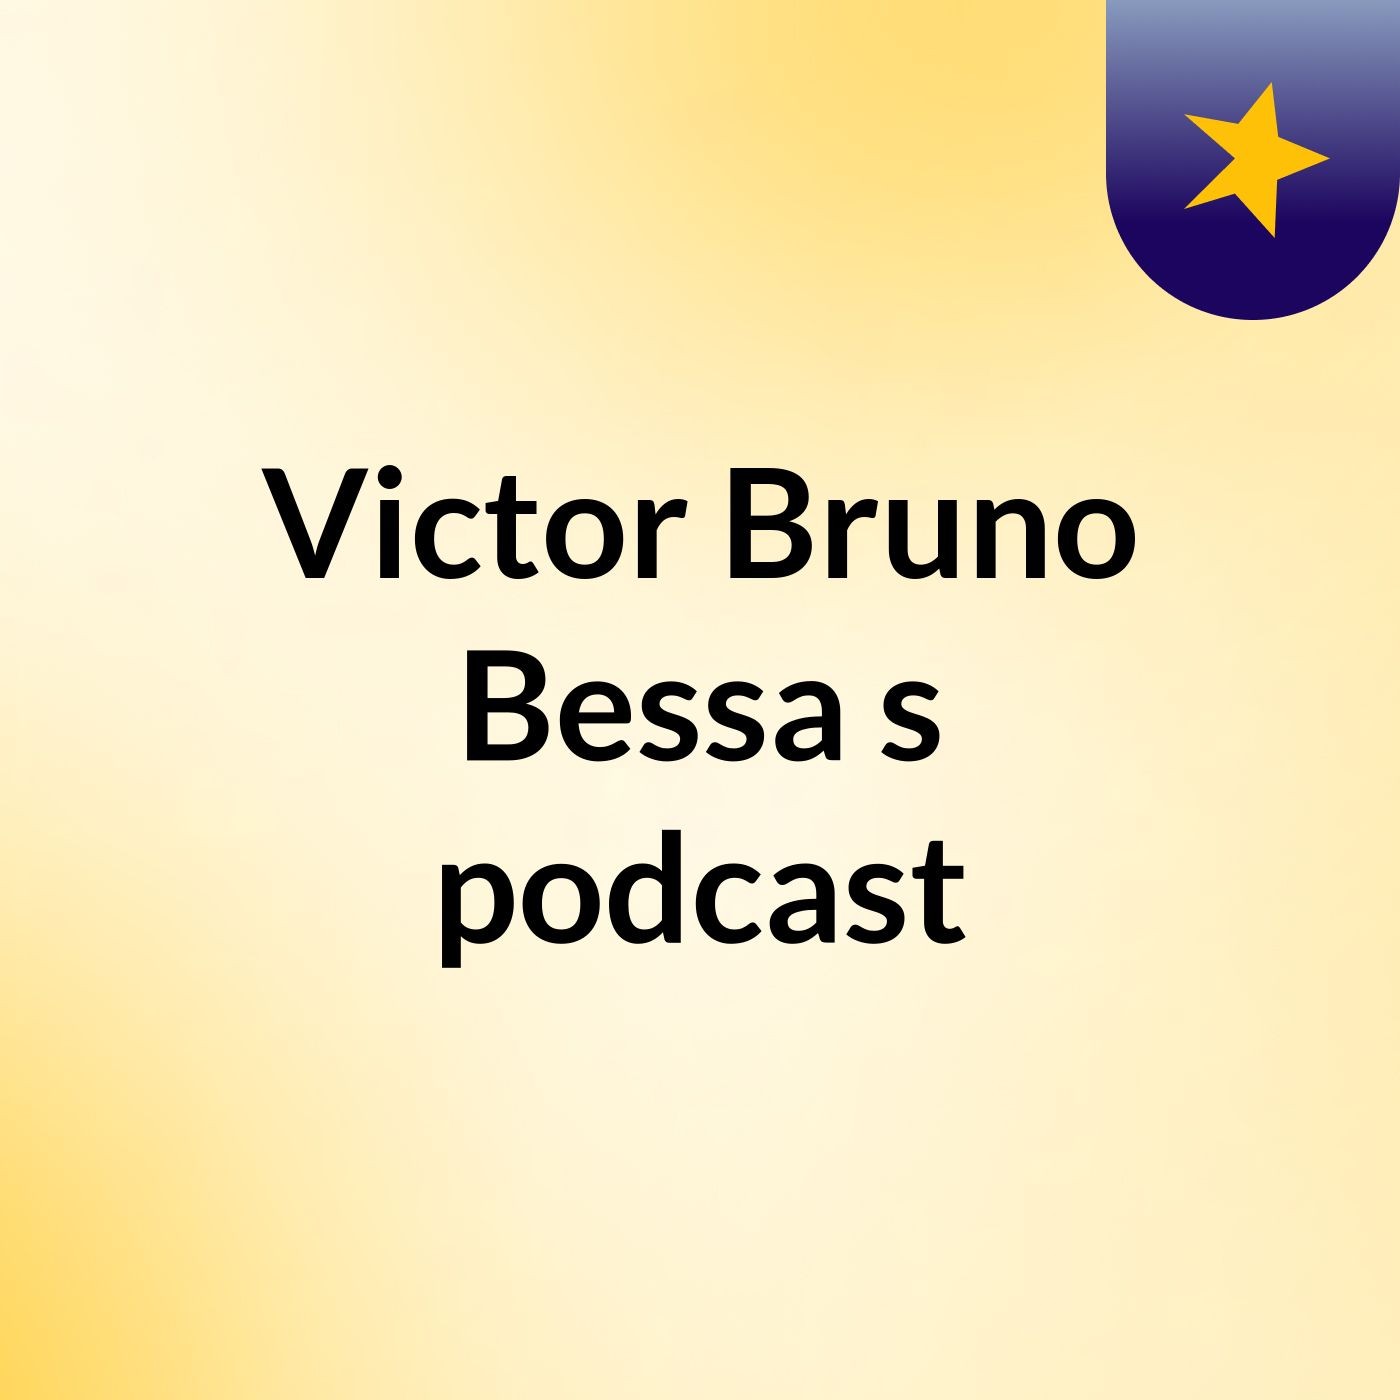 Victor Bruno Bessa's podcast